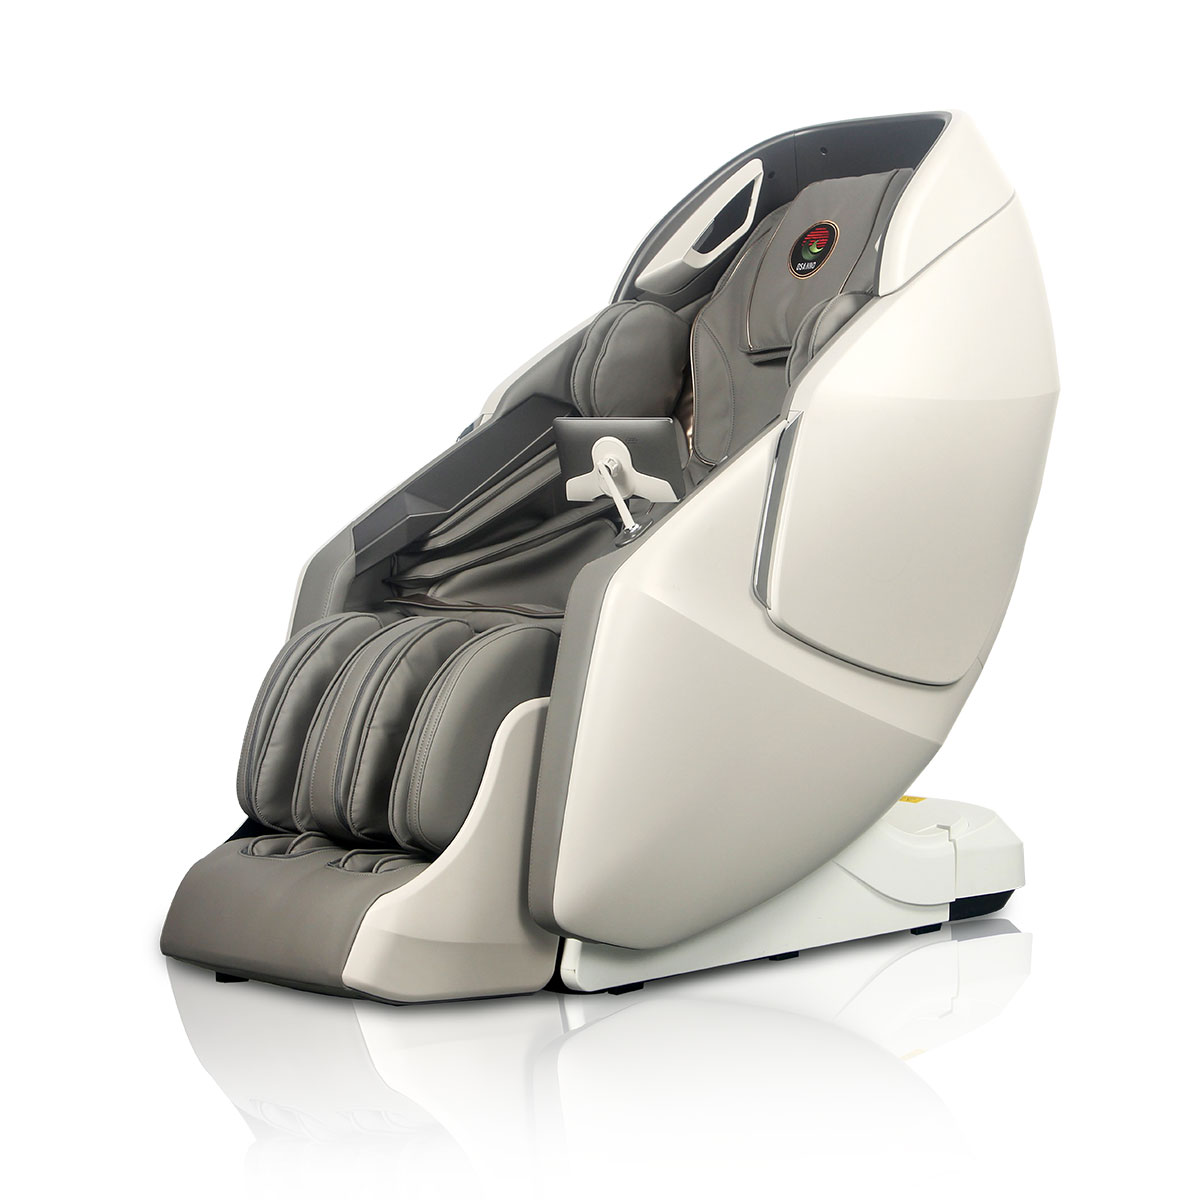 Ghế massage Osanno OS-3000 màu Trắng